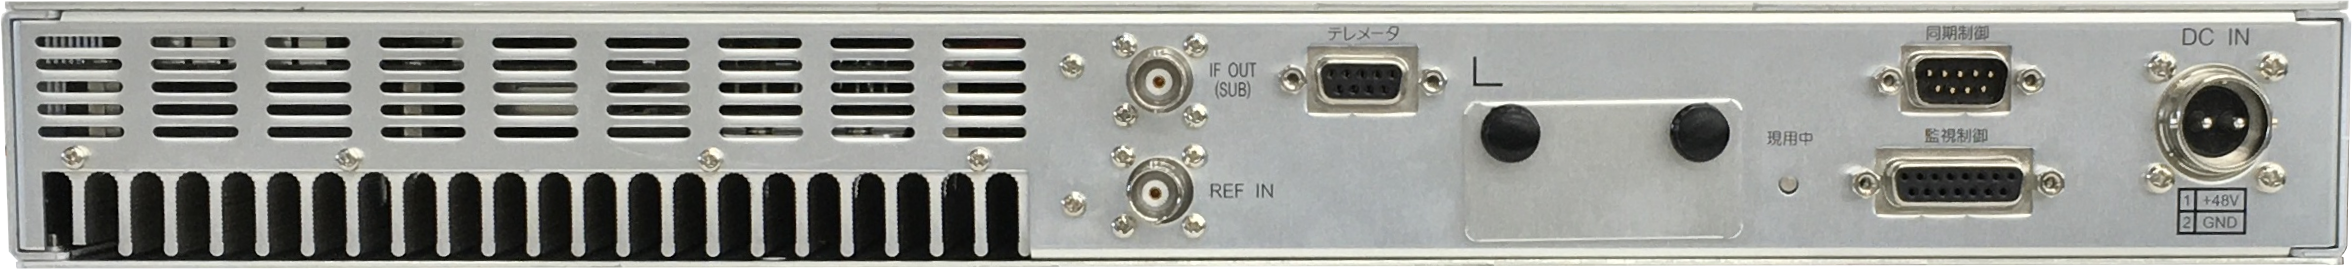 [pic] MODEL 6518: 地上デジタル放送 中継送信装置(補償器なし) 背面